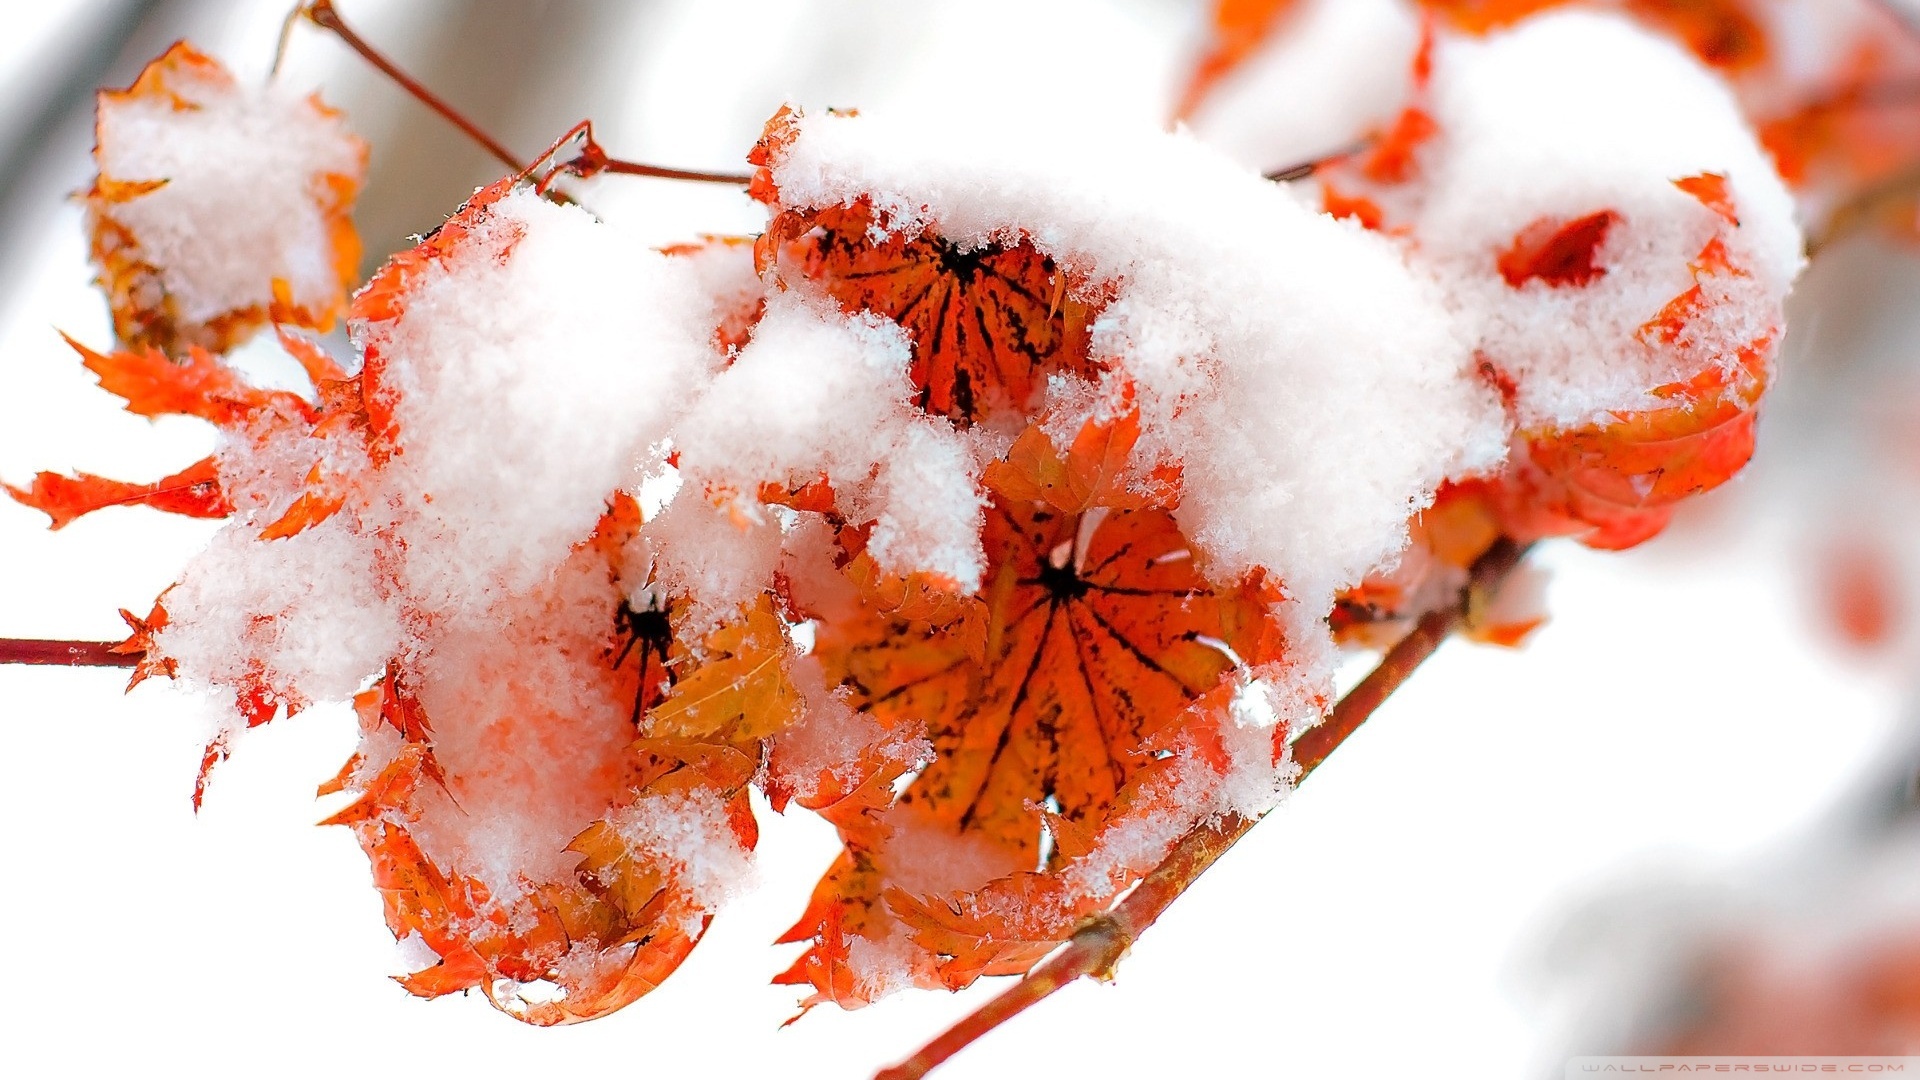 Orange Leaves, Winter Ultra HD Desktop Background Wallpaper for 4K UHD TV, Tablet